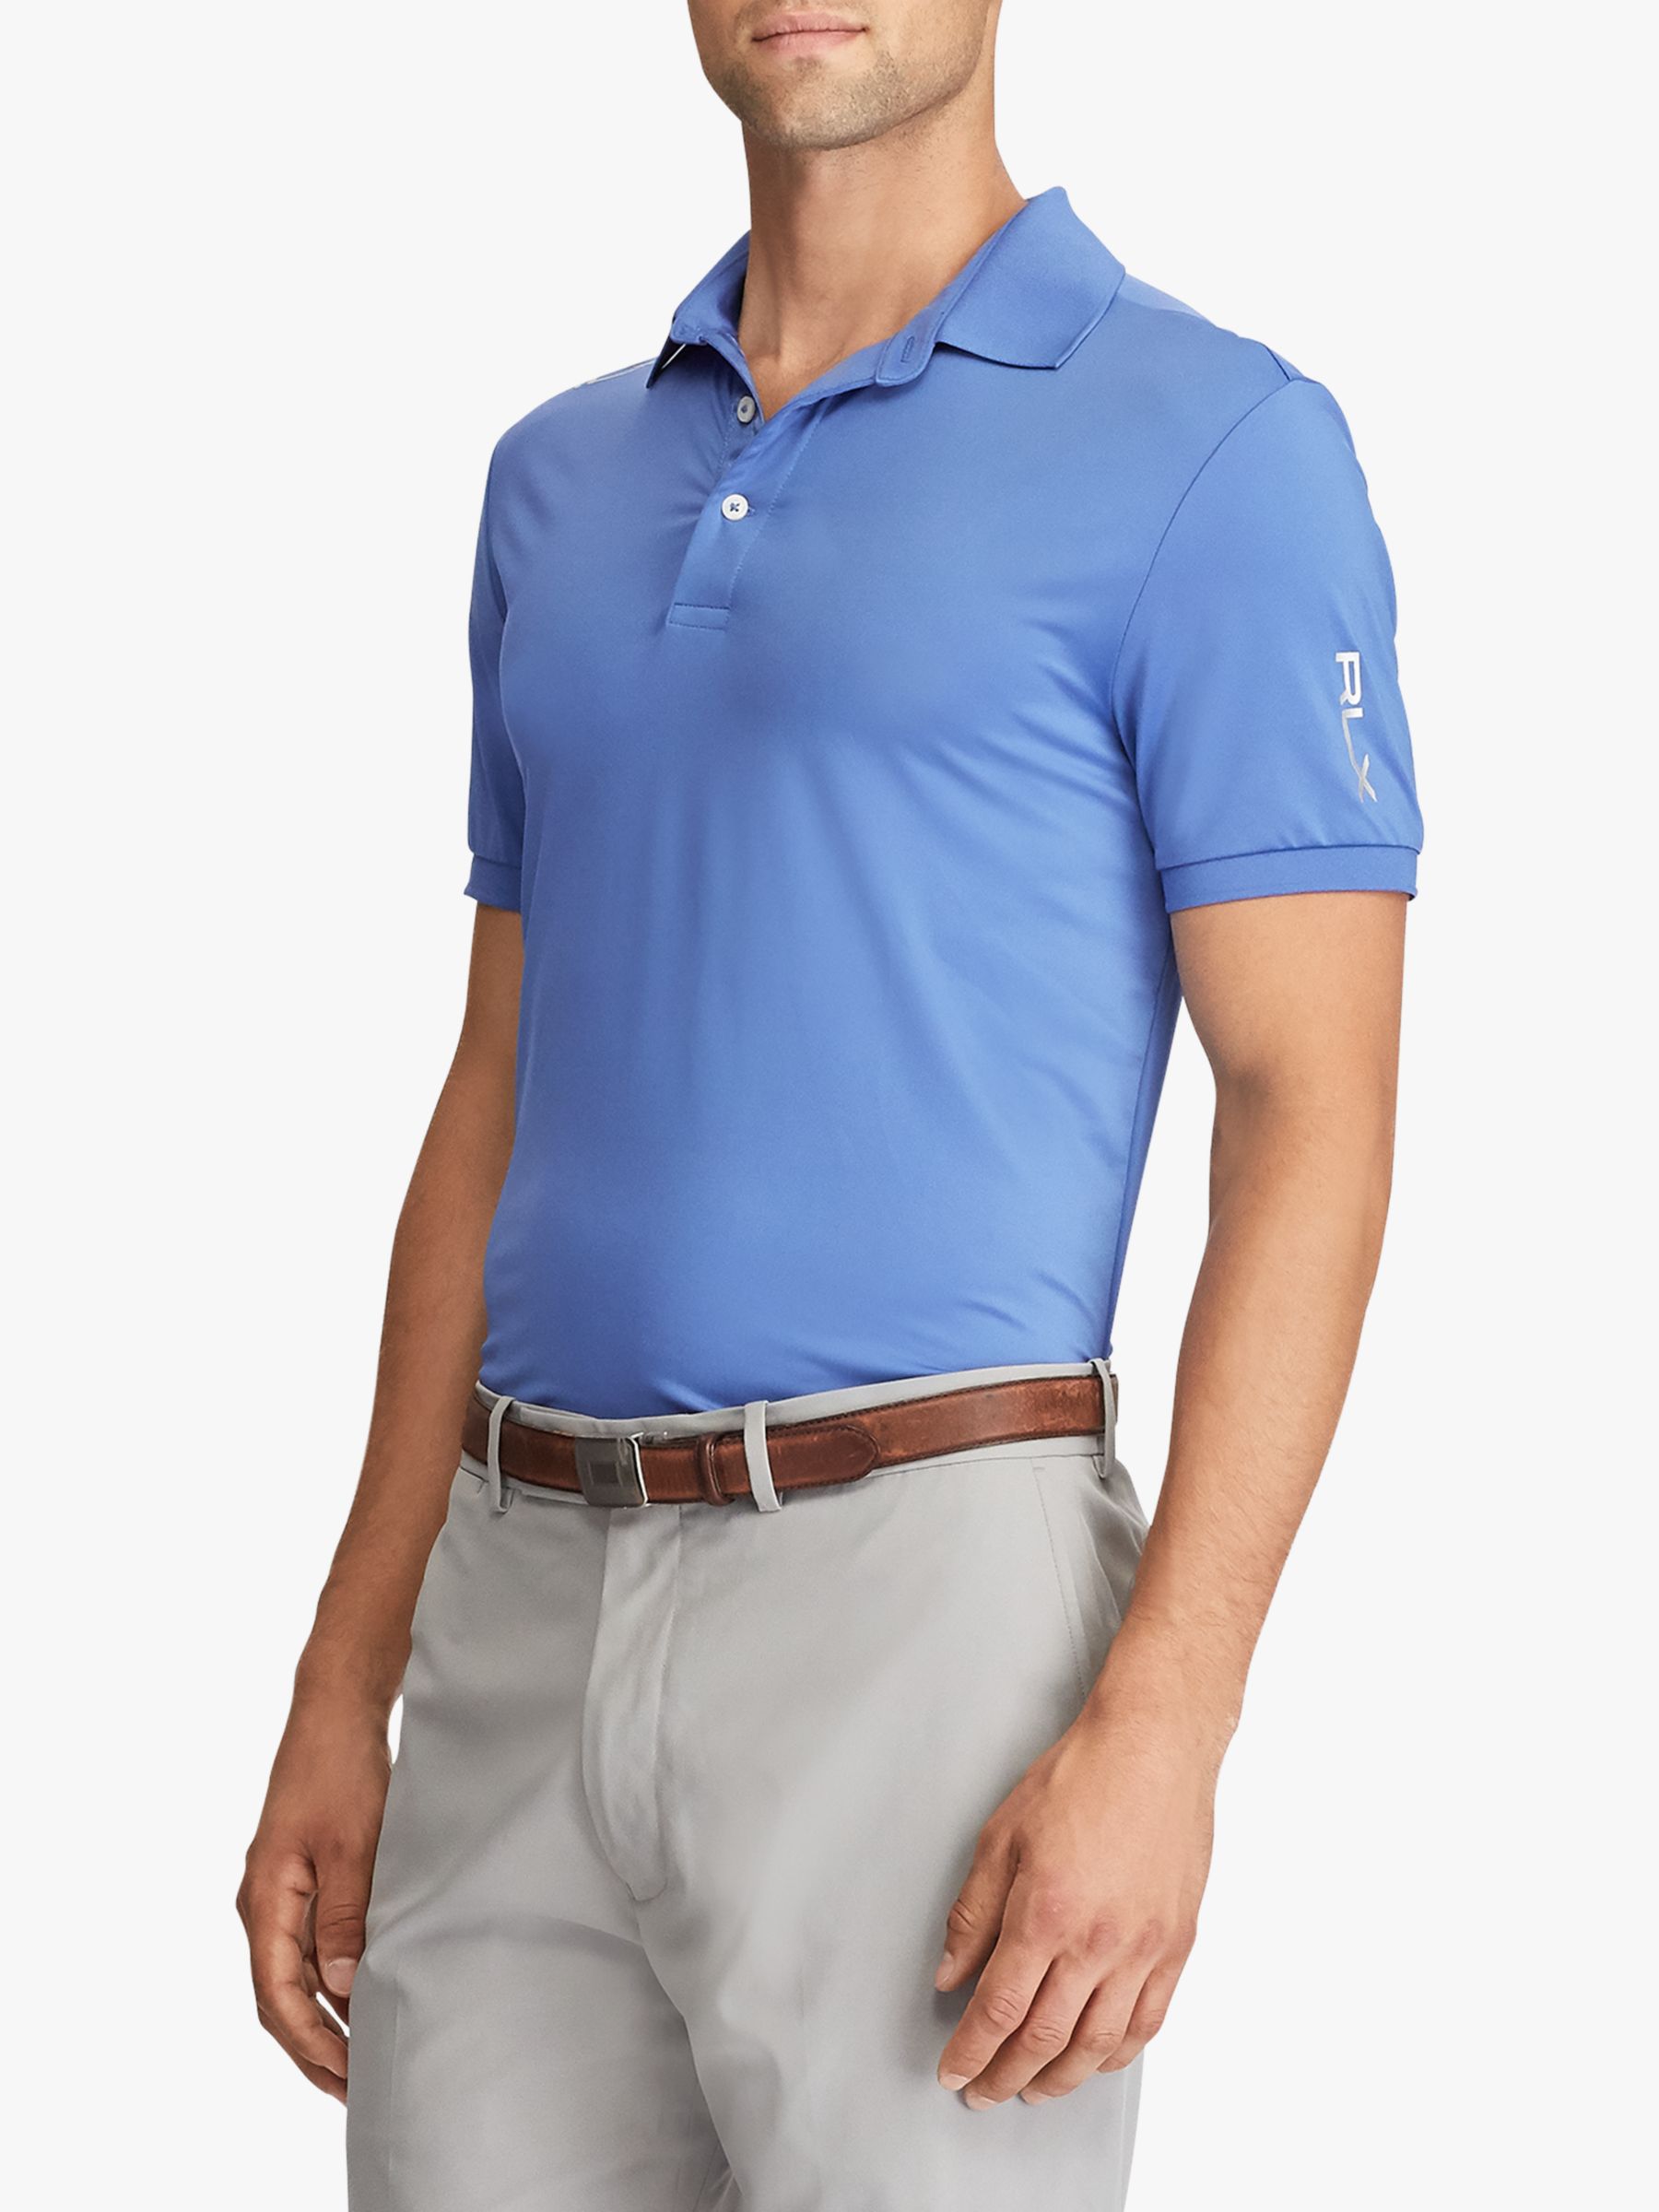 rlx golf shirts on sale